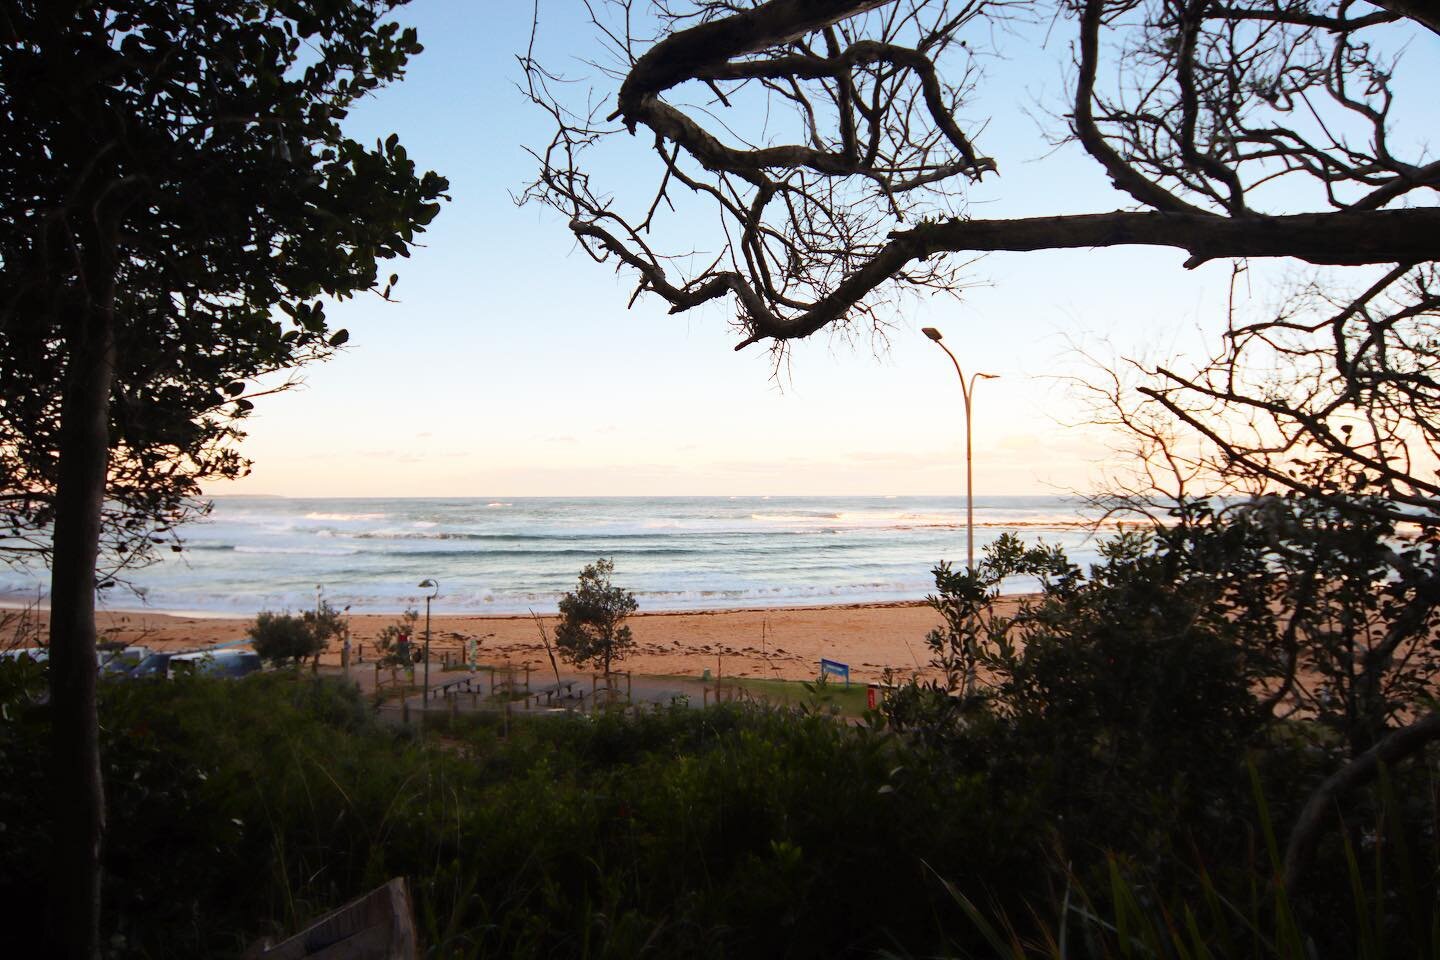 Toowoon bay 

#toowoonbaybeach #toowoonbay #beach #eastcoastaustralia #centralcoastnsw